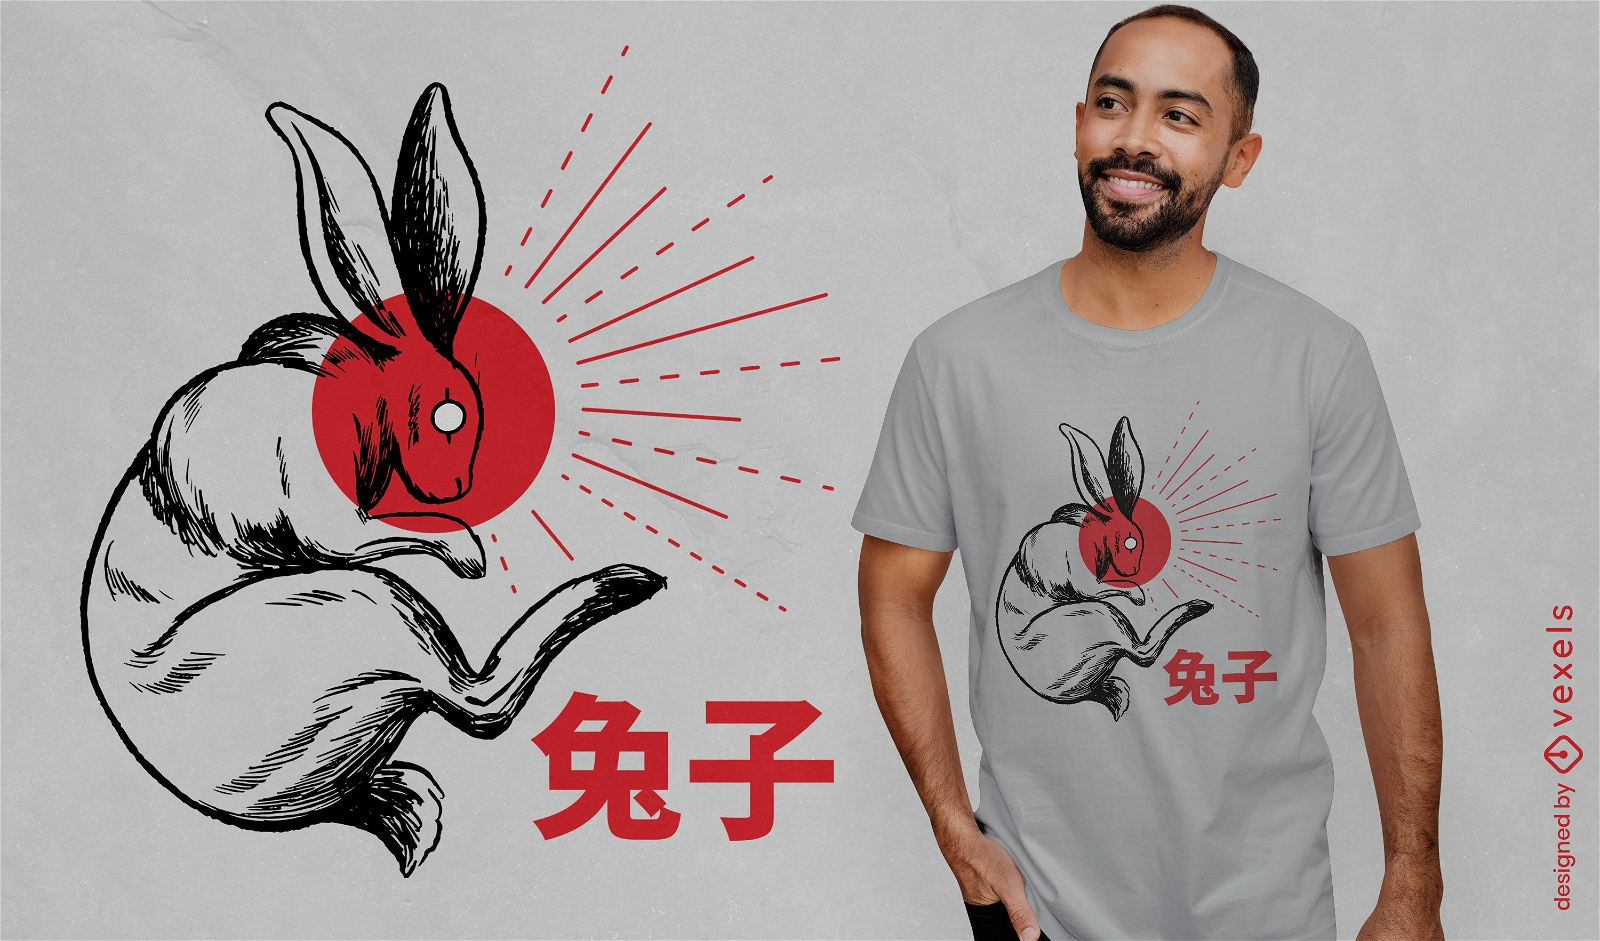 Dise?o de camiseta de conejo japon?s.